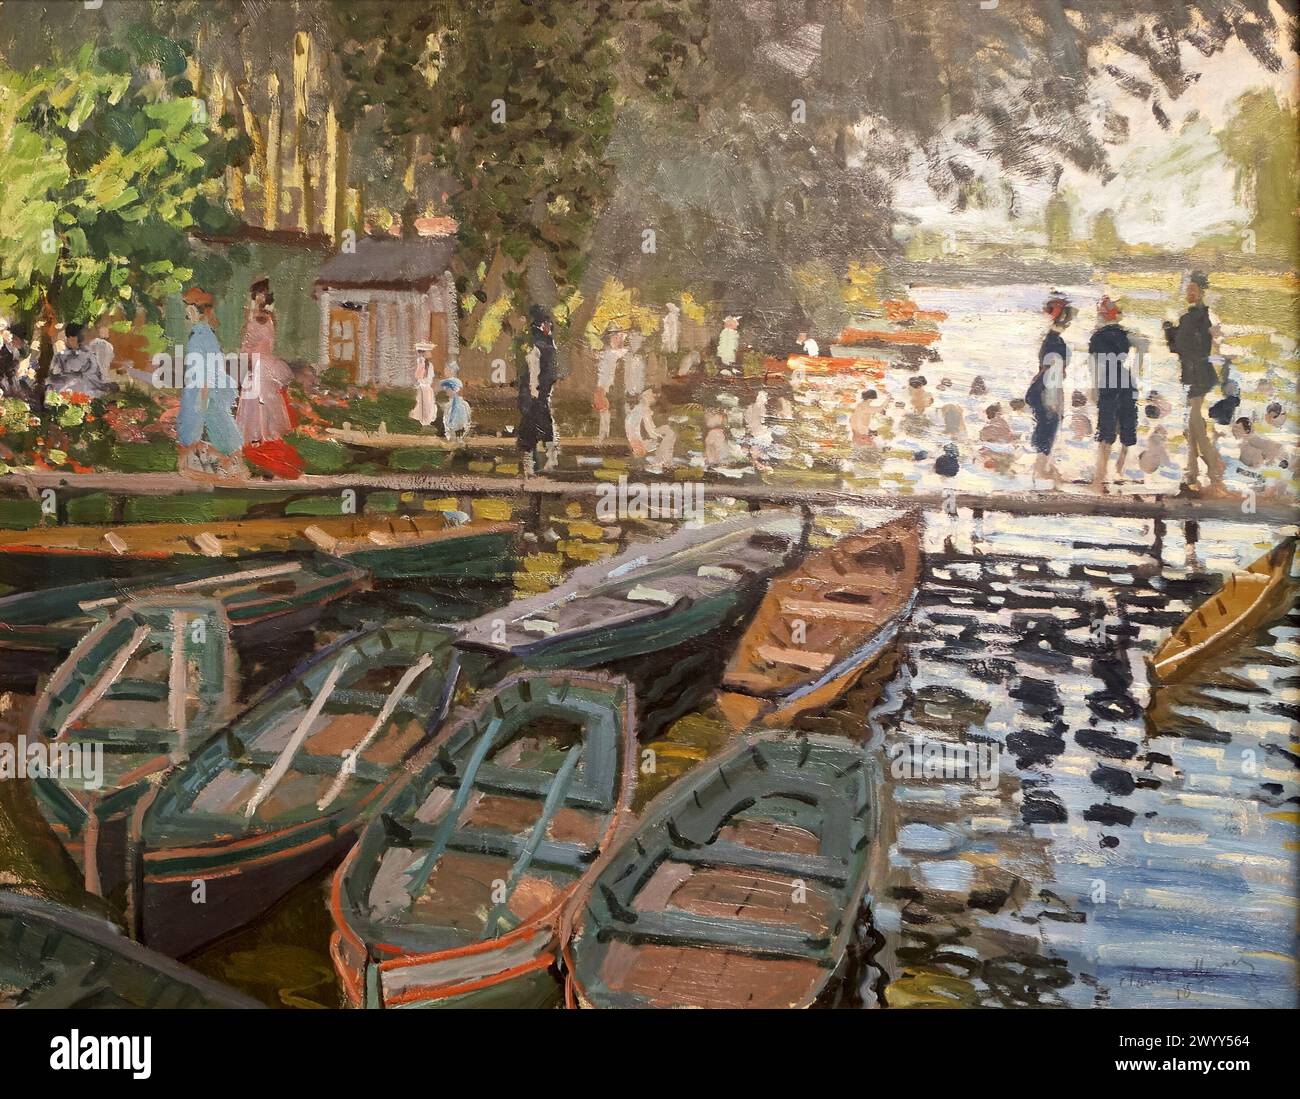 'Bathers at la Grenouillère', 1869, Claude Monet, National Gallery, Londres, Angleterre, Royaume-Uni. Banque D'Images